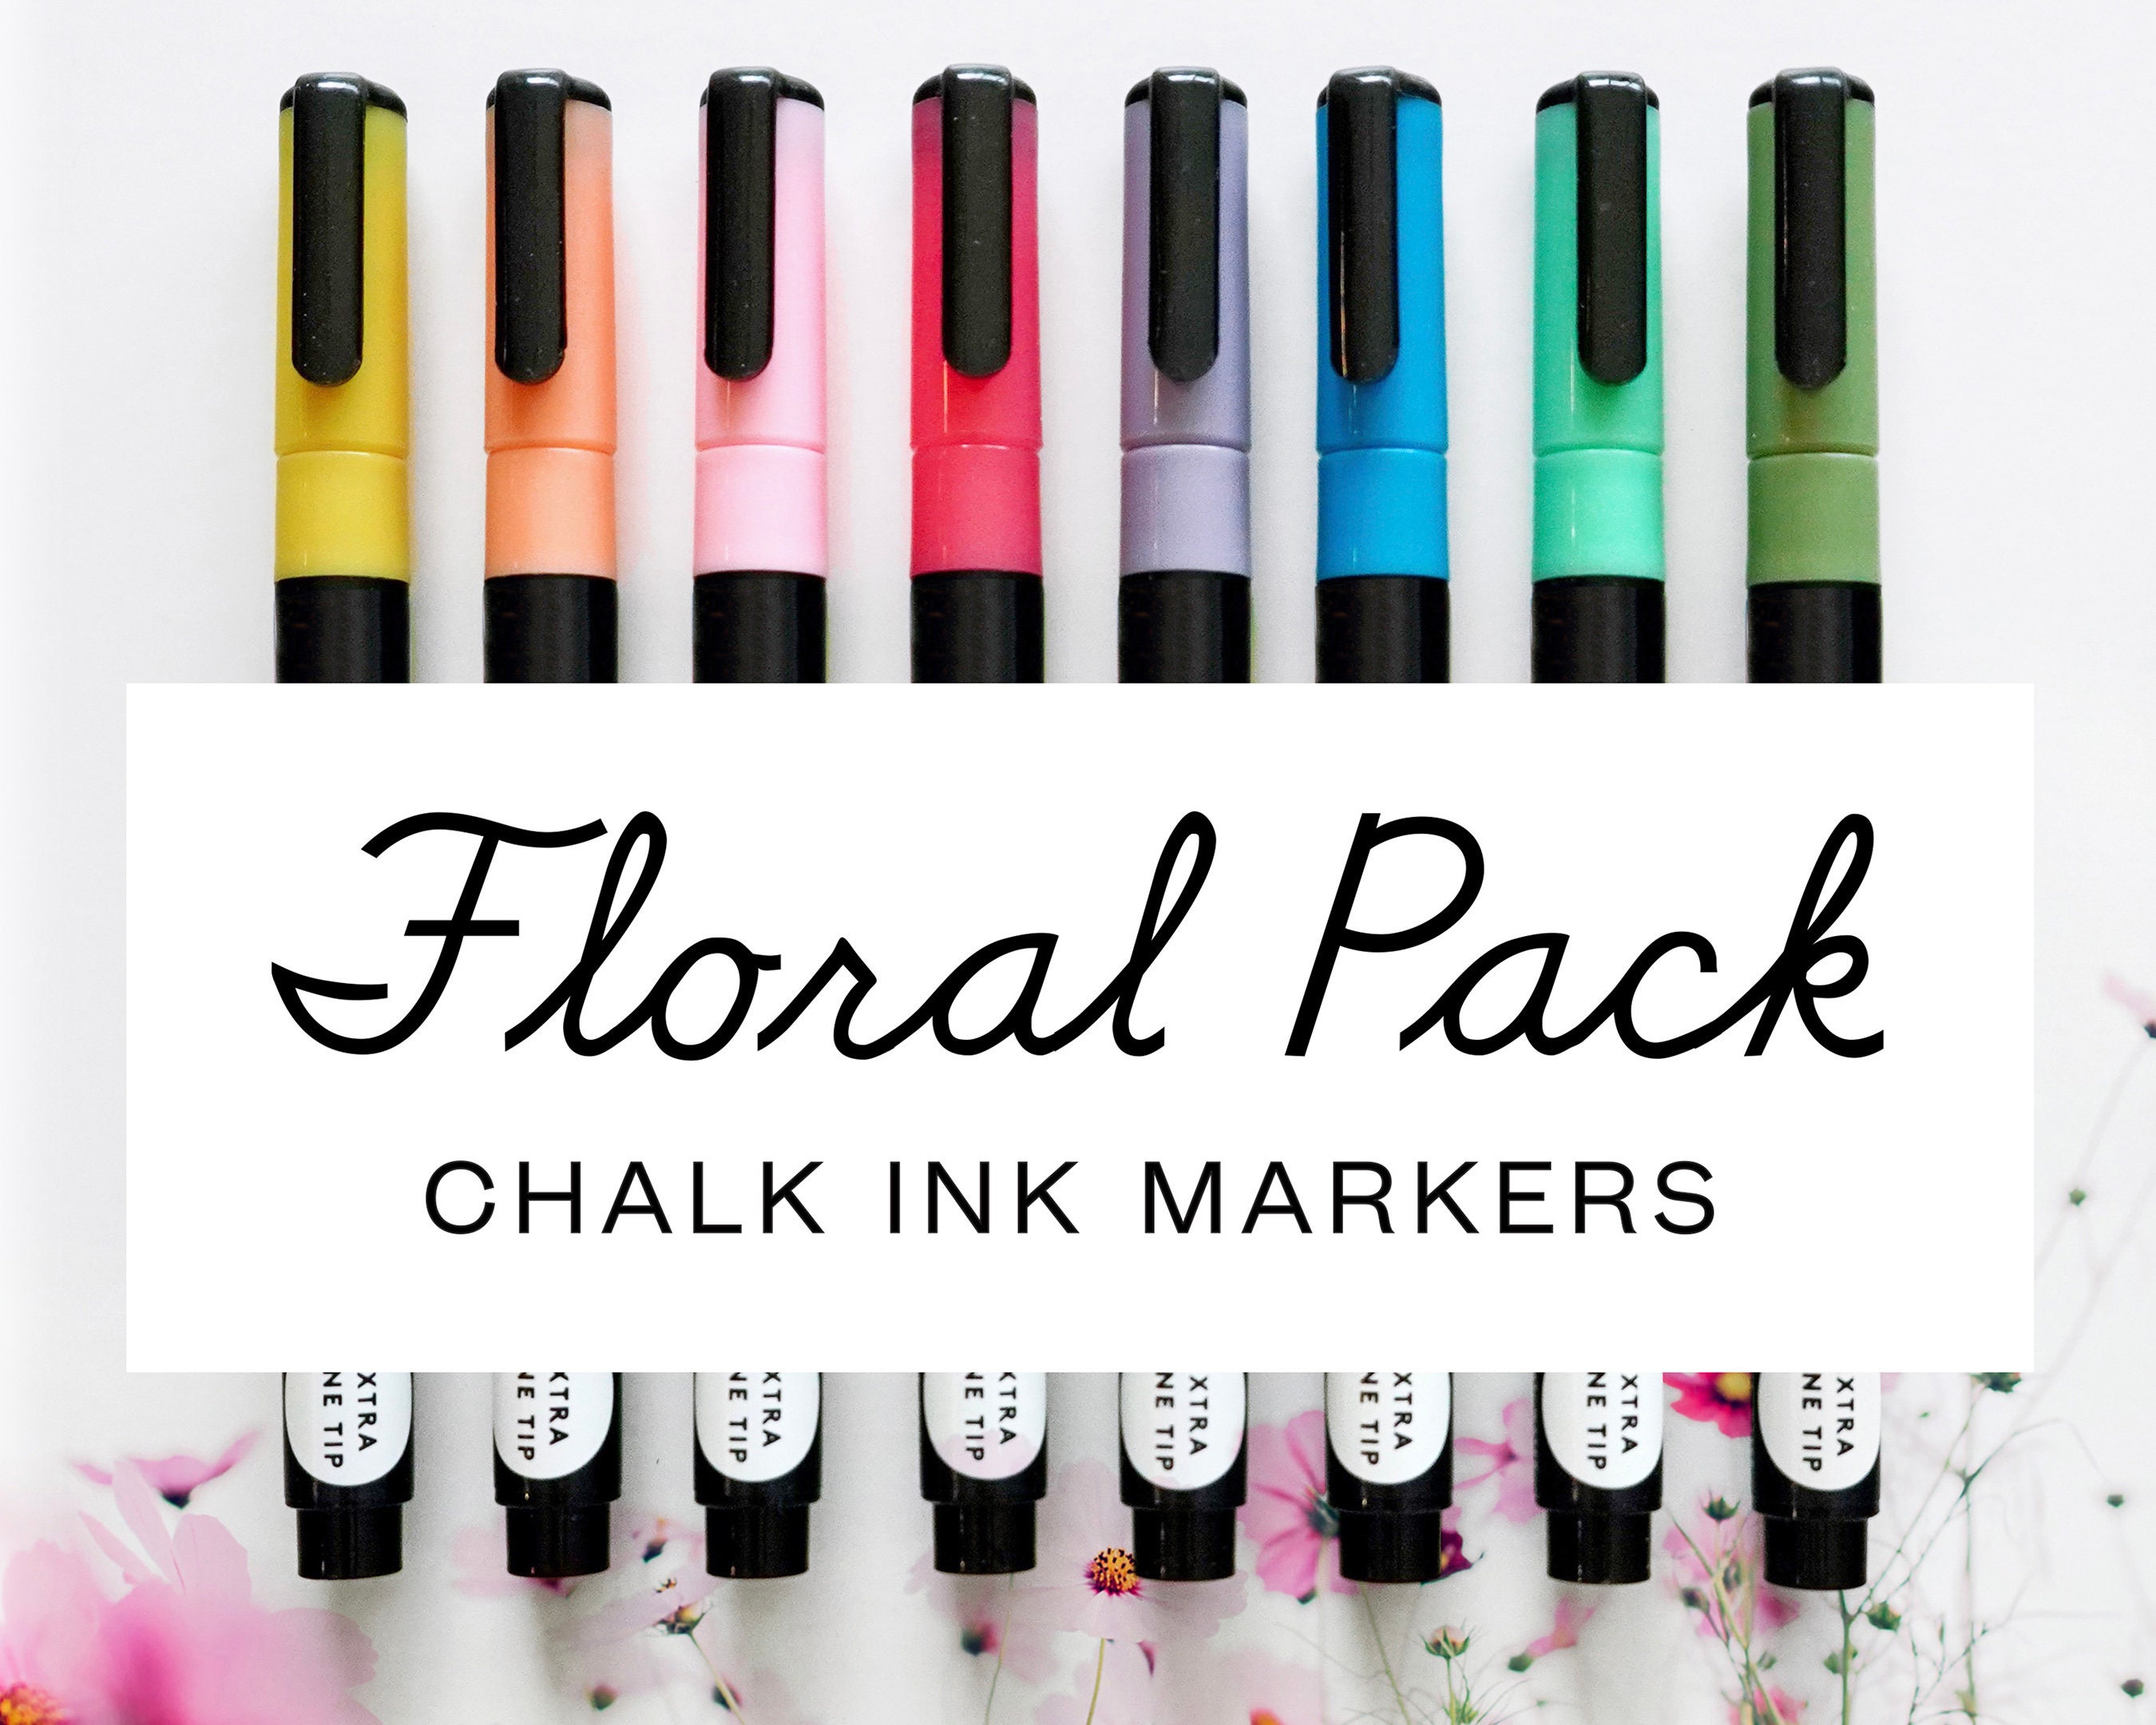 Lakeshore Write & Wipe Thin-Line Markers - Class Pack